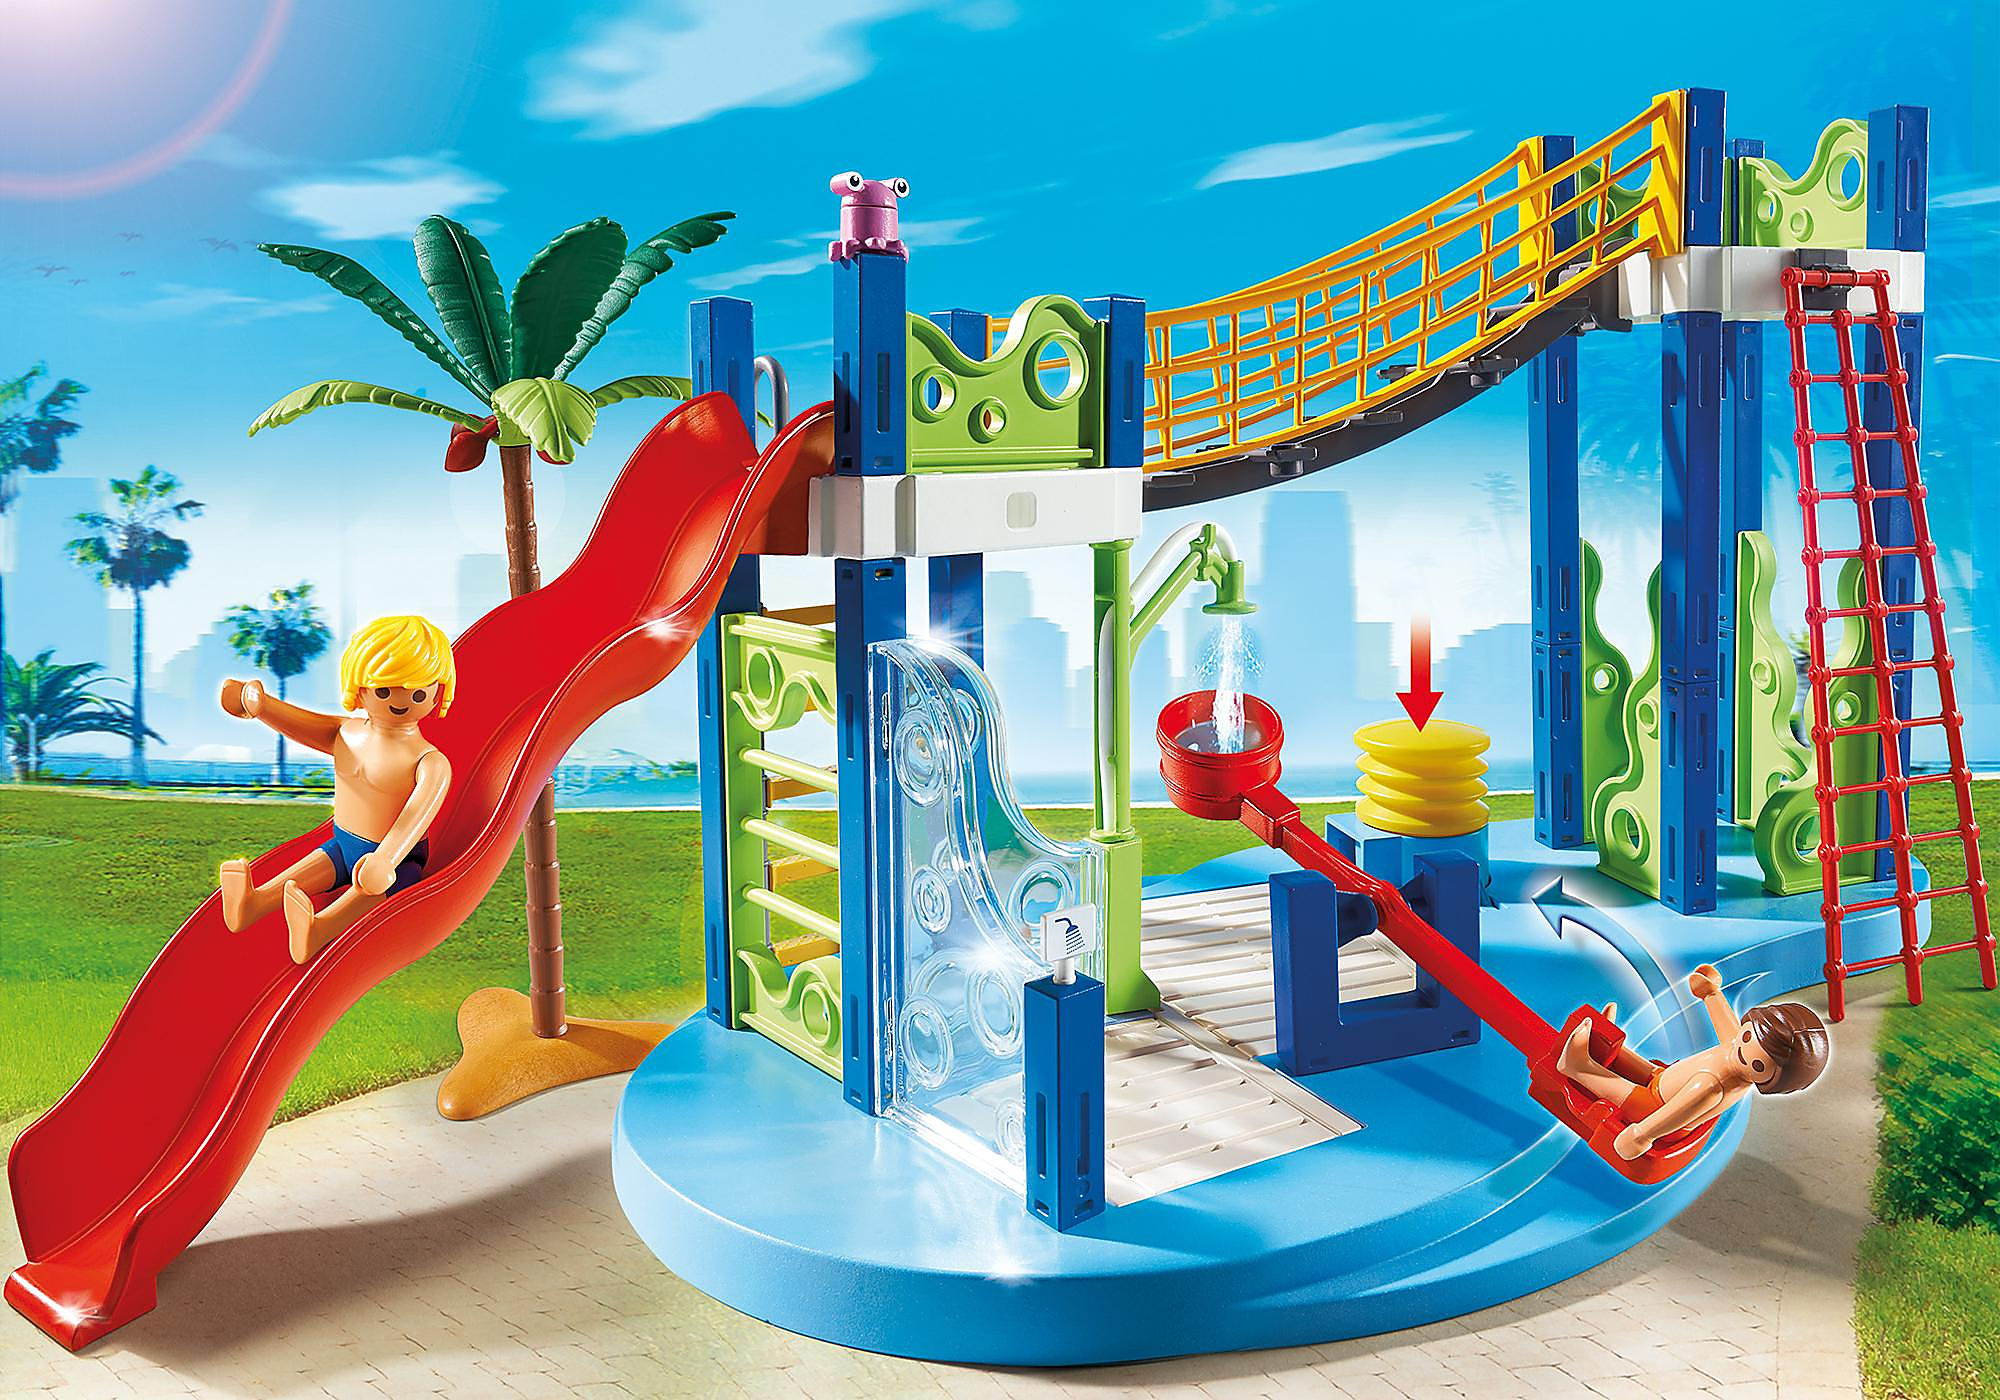 Playmobil - 6670 - Aire de jeux aquatique